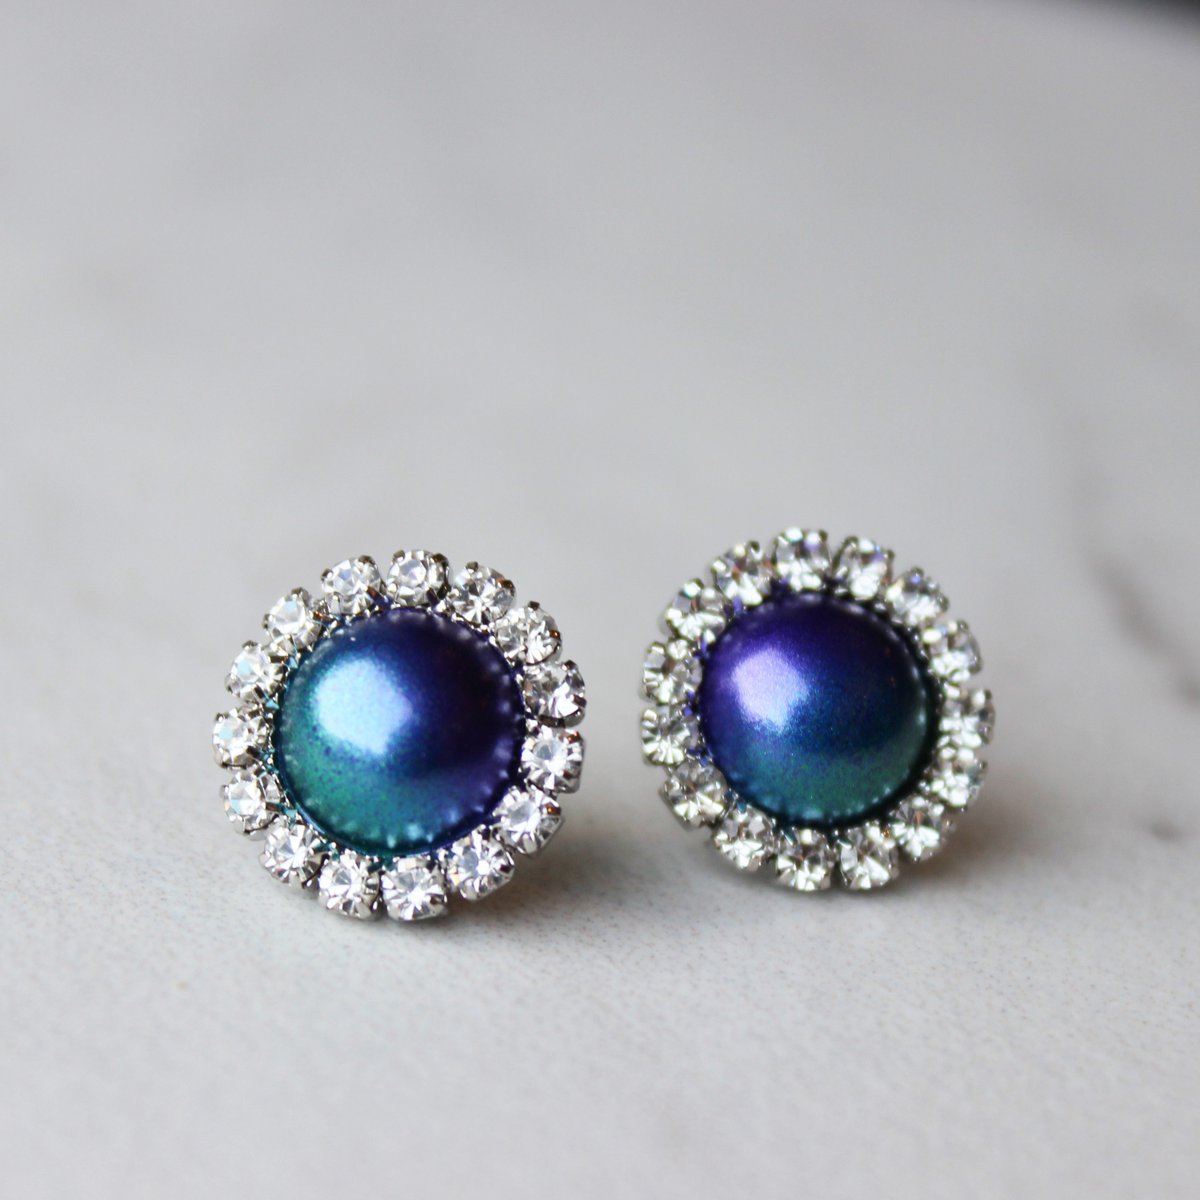 Peacock Earrings, Peacock Jewelry, Peacock Wedding Pearl Earrings, Colorful Earrings, Peacock Bridesmaid Earrings Gift, Green, Blue, Purple https://t.co/gK3EWKncGa #shopping #etsy #style #rt #etsyshop #love #gifts #cute https://t.co/ktZhwg4VhD